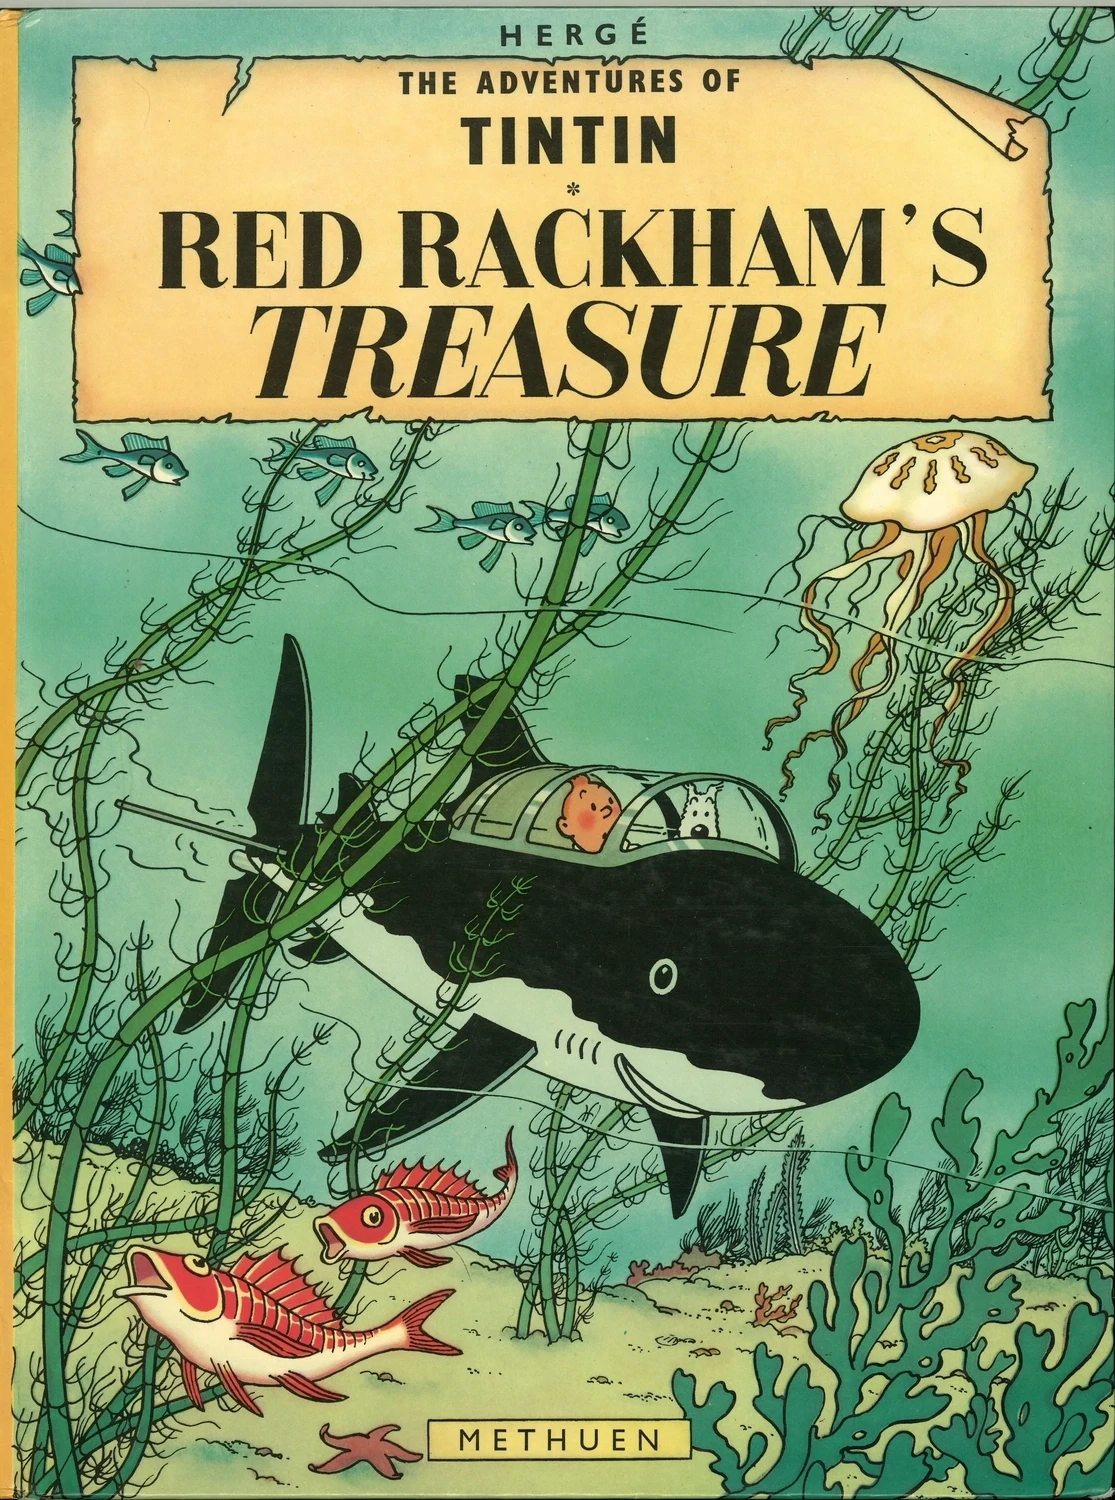 Red Rackham's Treasure (Adventures of Tintin No. 12)